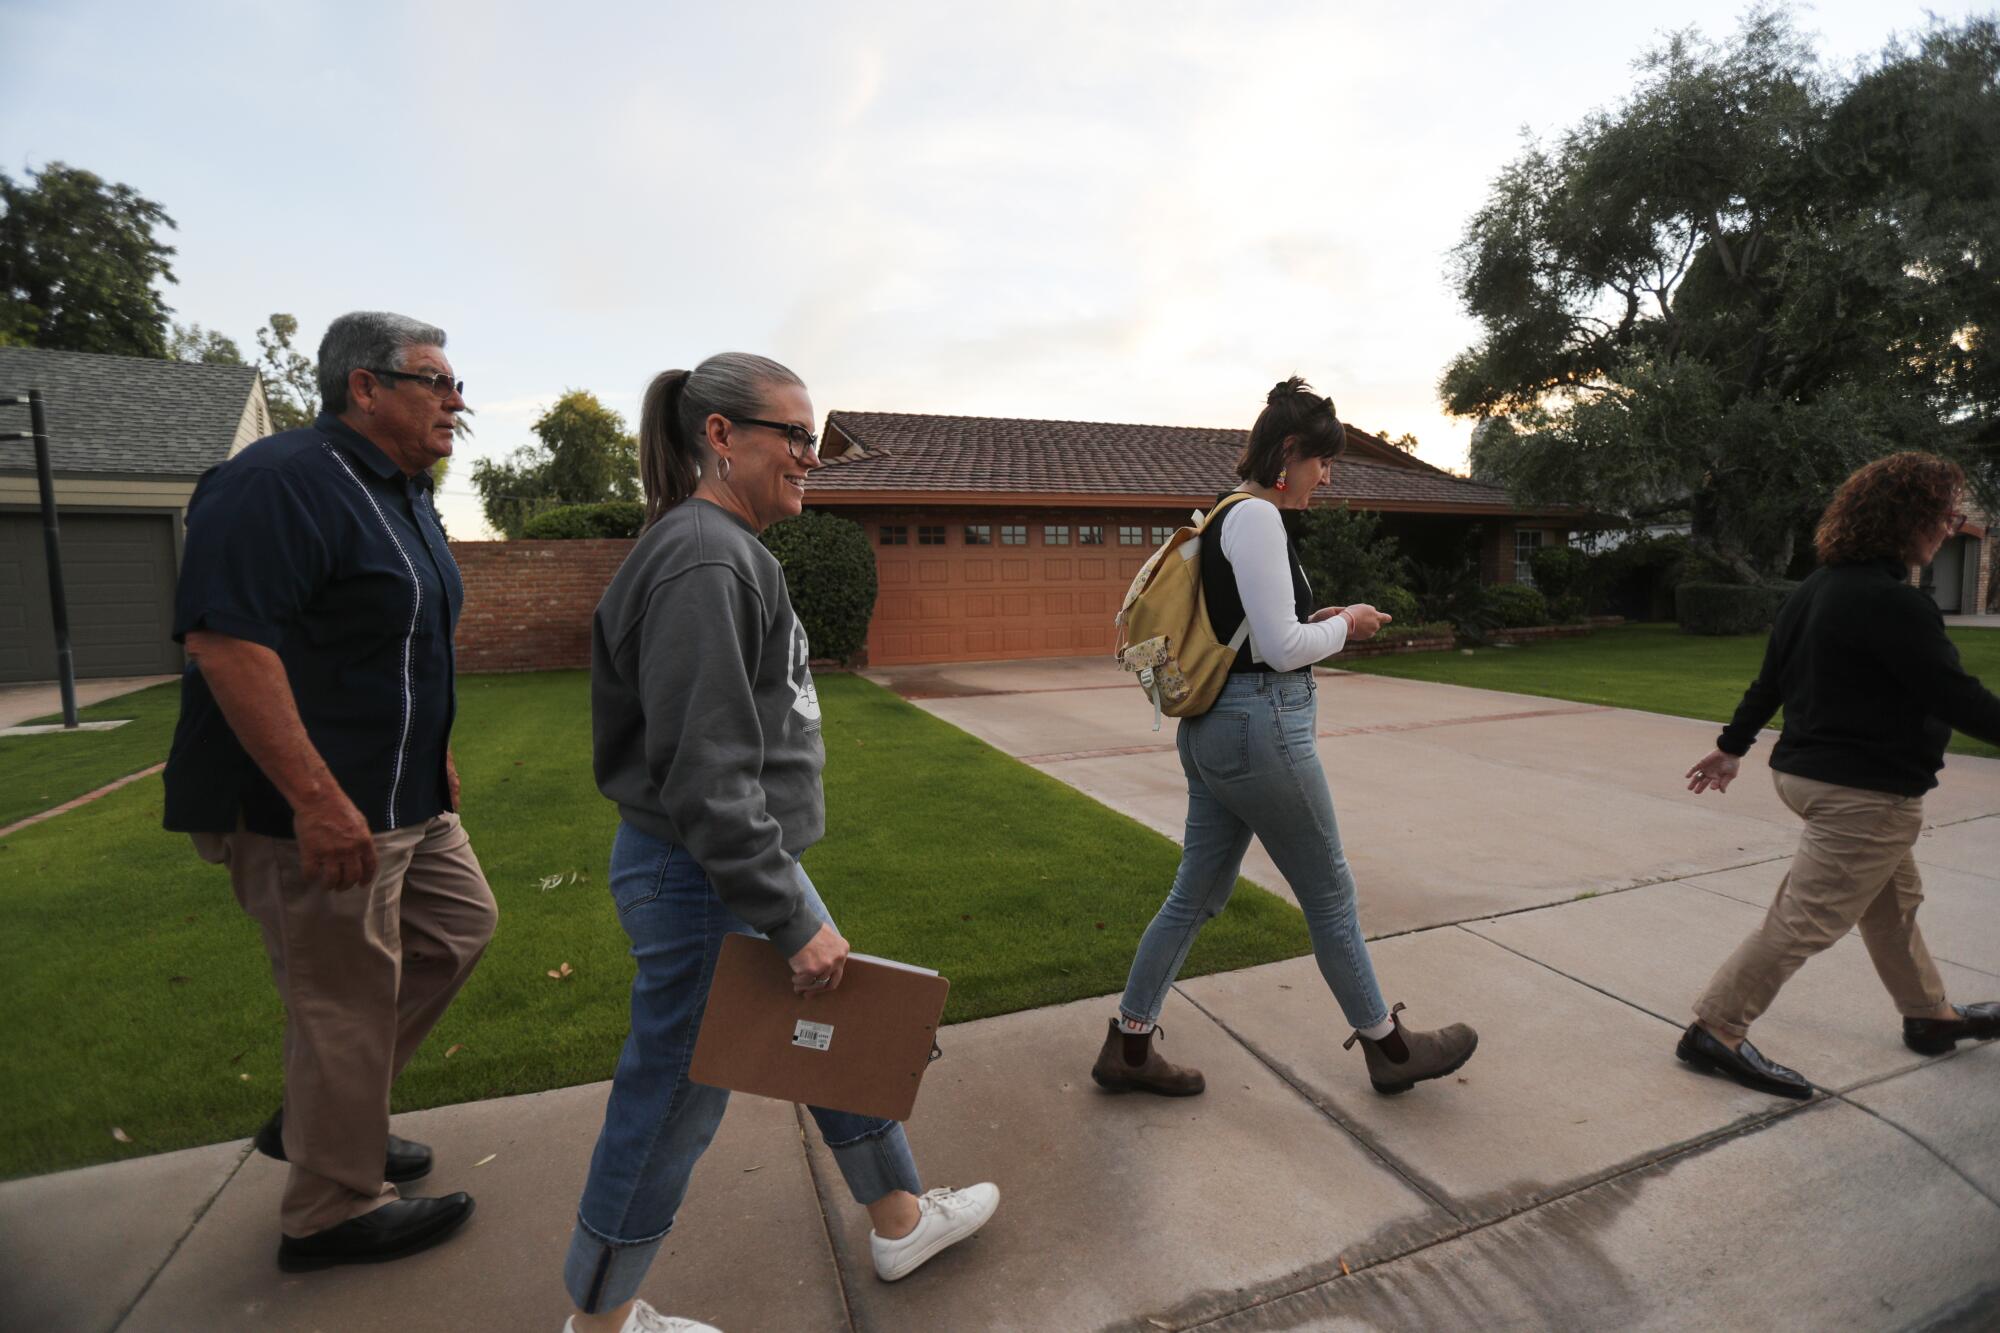 Arizona Democratic gubernatorial candidate Katie Hobbs campaigns Nov. 7 in Phoenix. (Gina Ferazzi / Los Angeles Times)